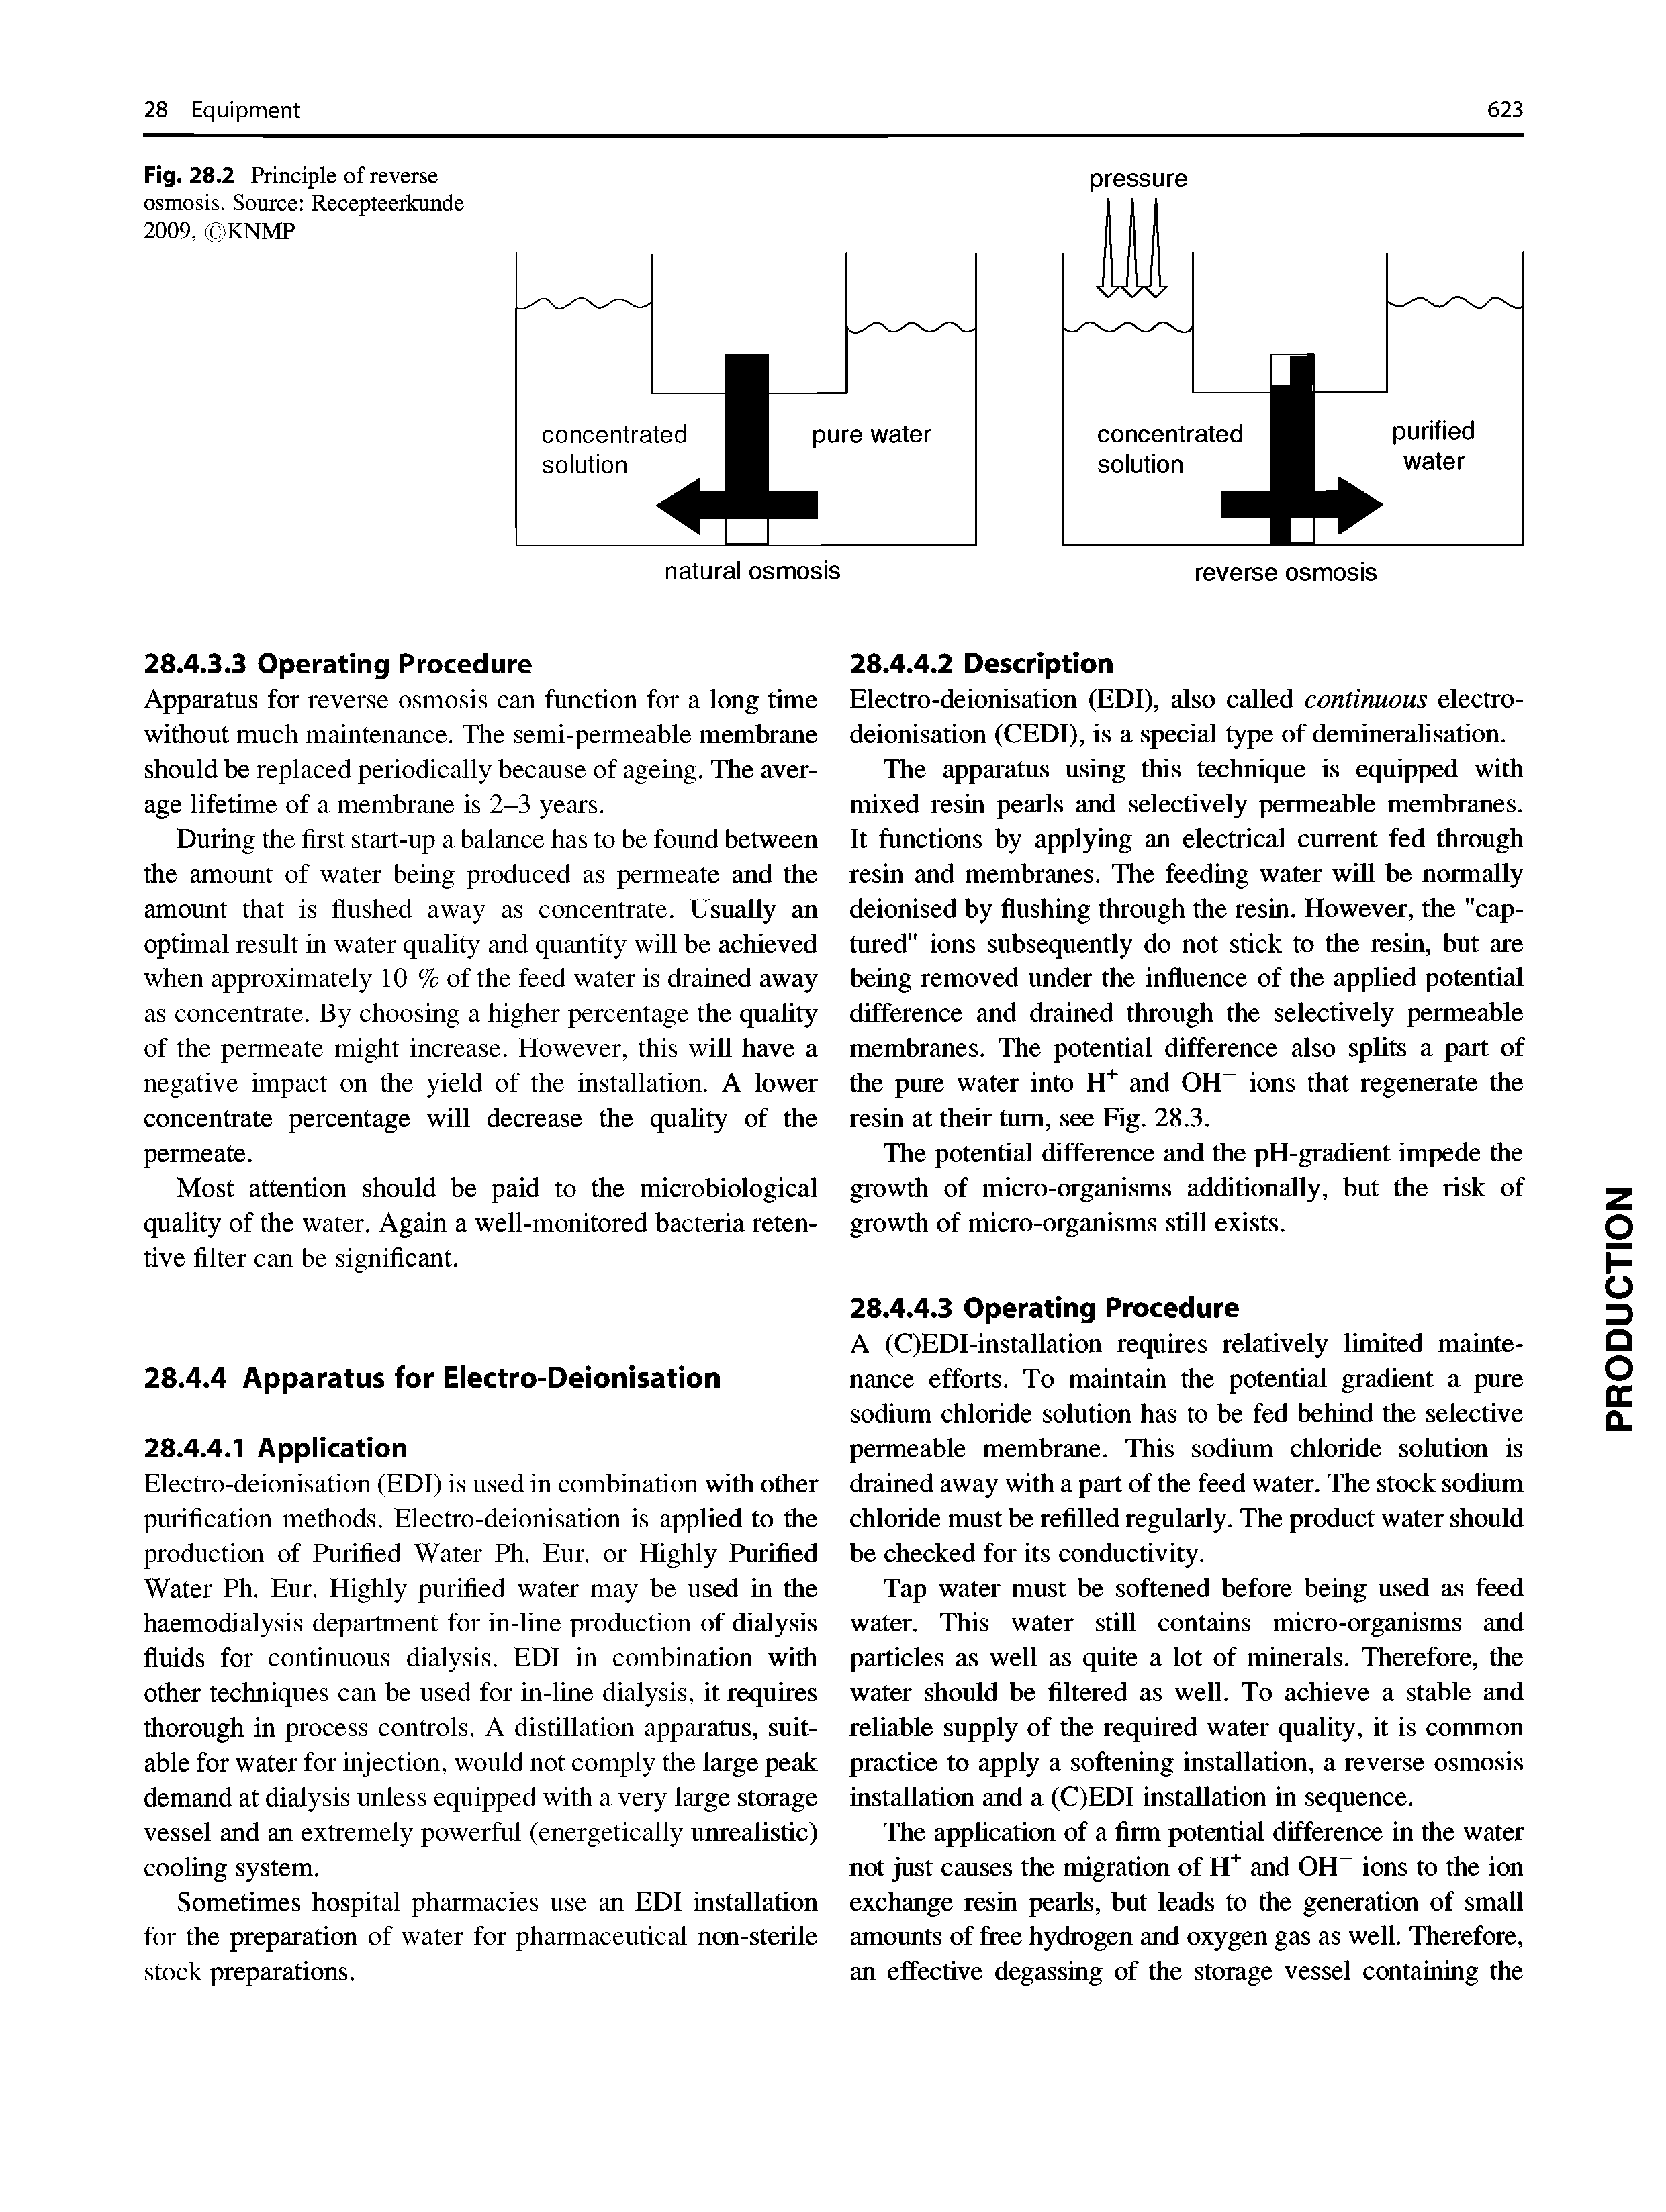 Fig. 28.2 Principle of reverse osmosis. Source Recepteerkunde 2009, KNMP...